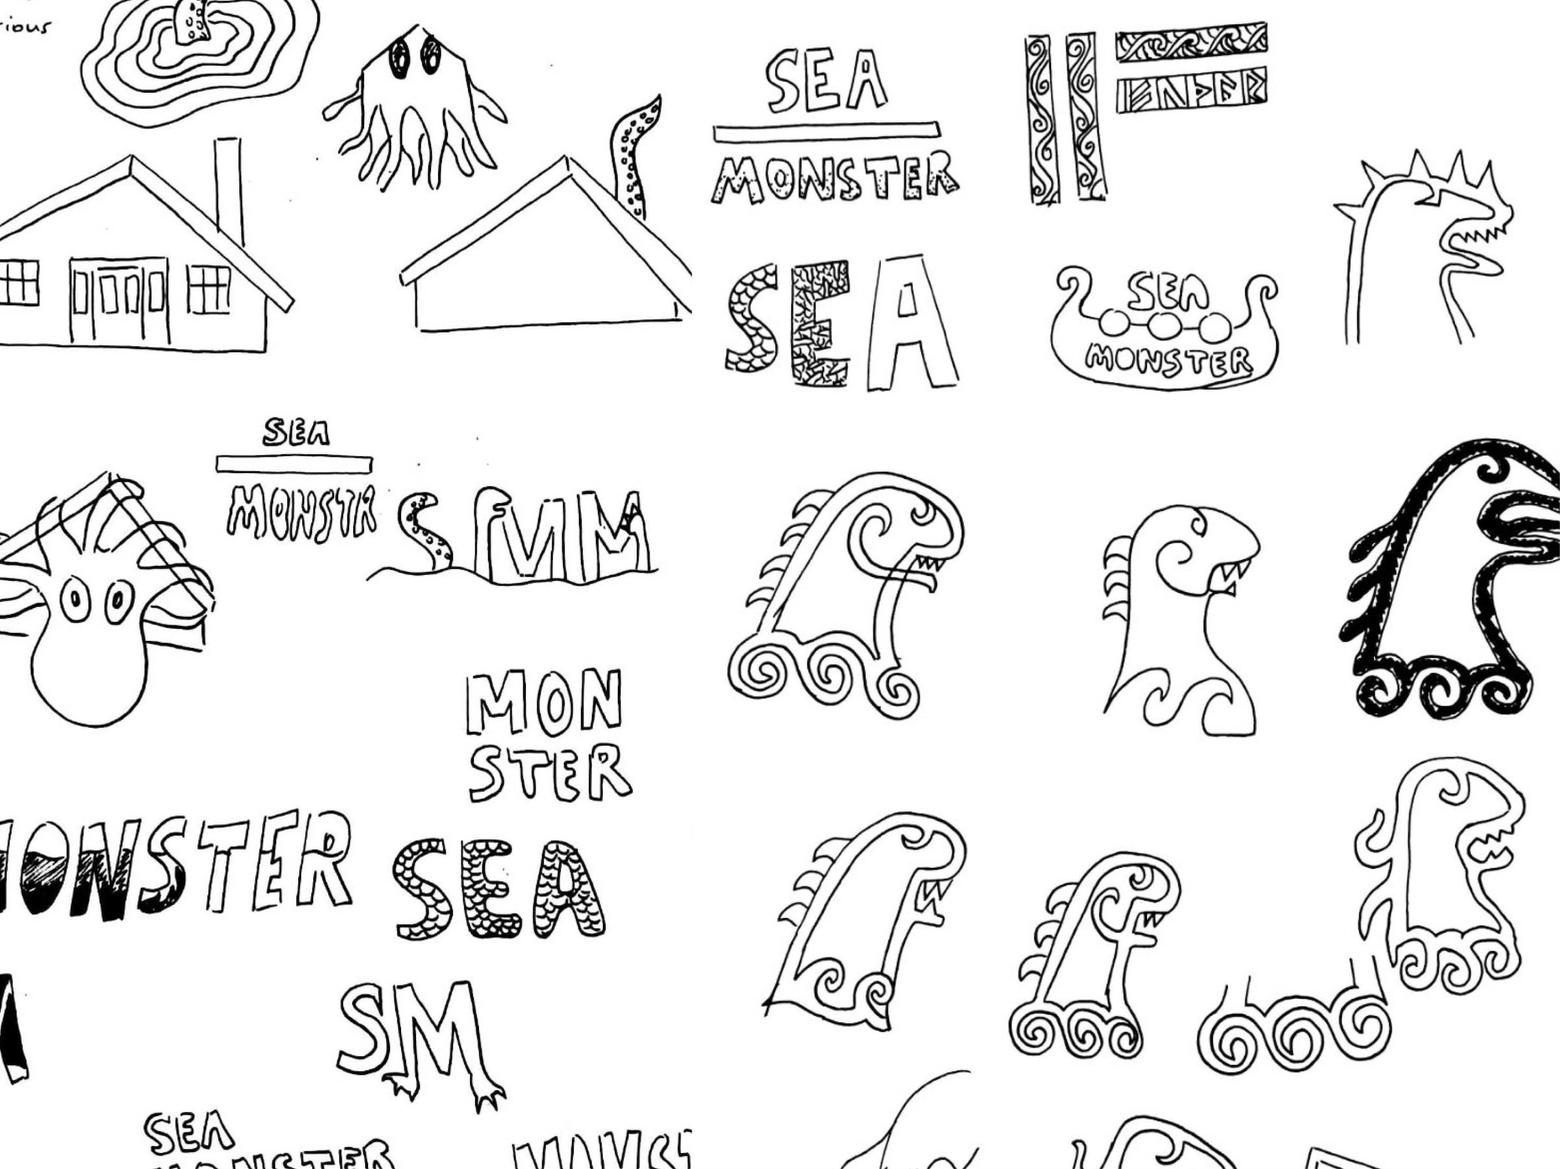 Sea Monster Museum process doodles